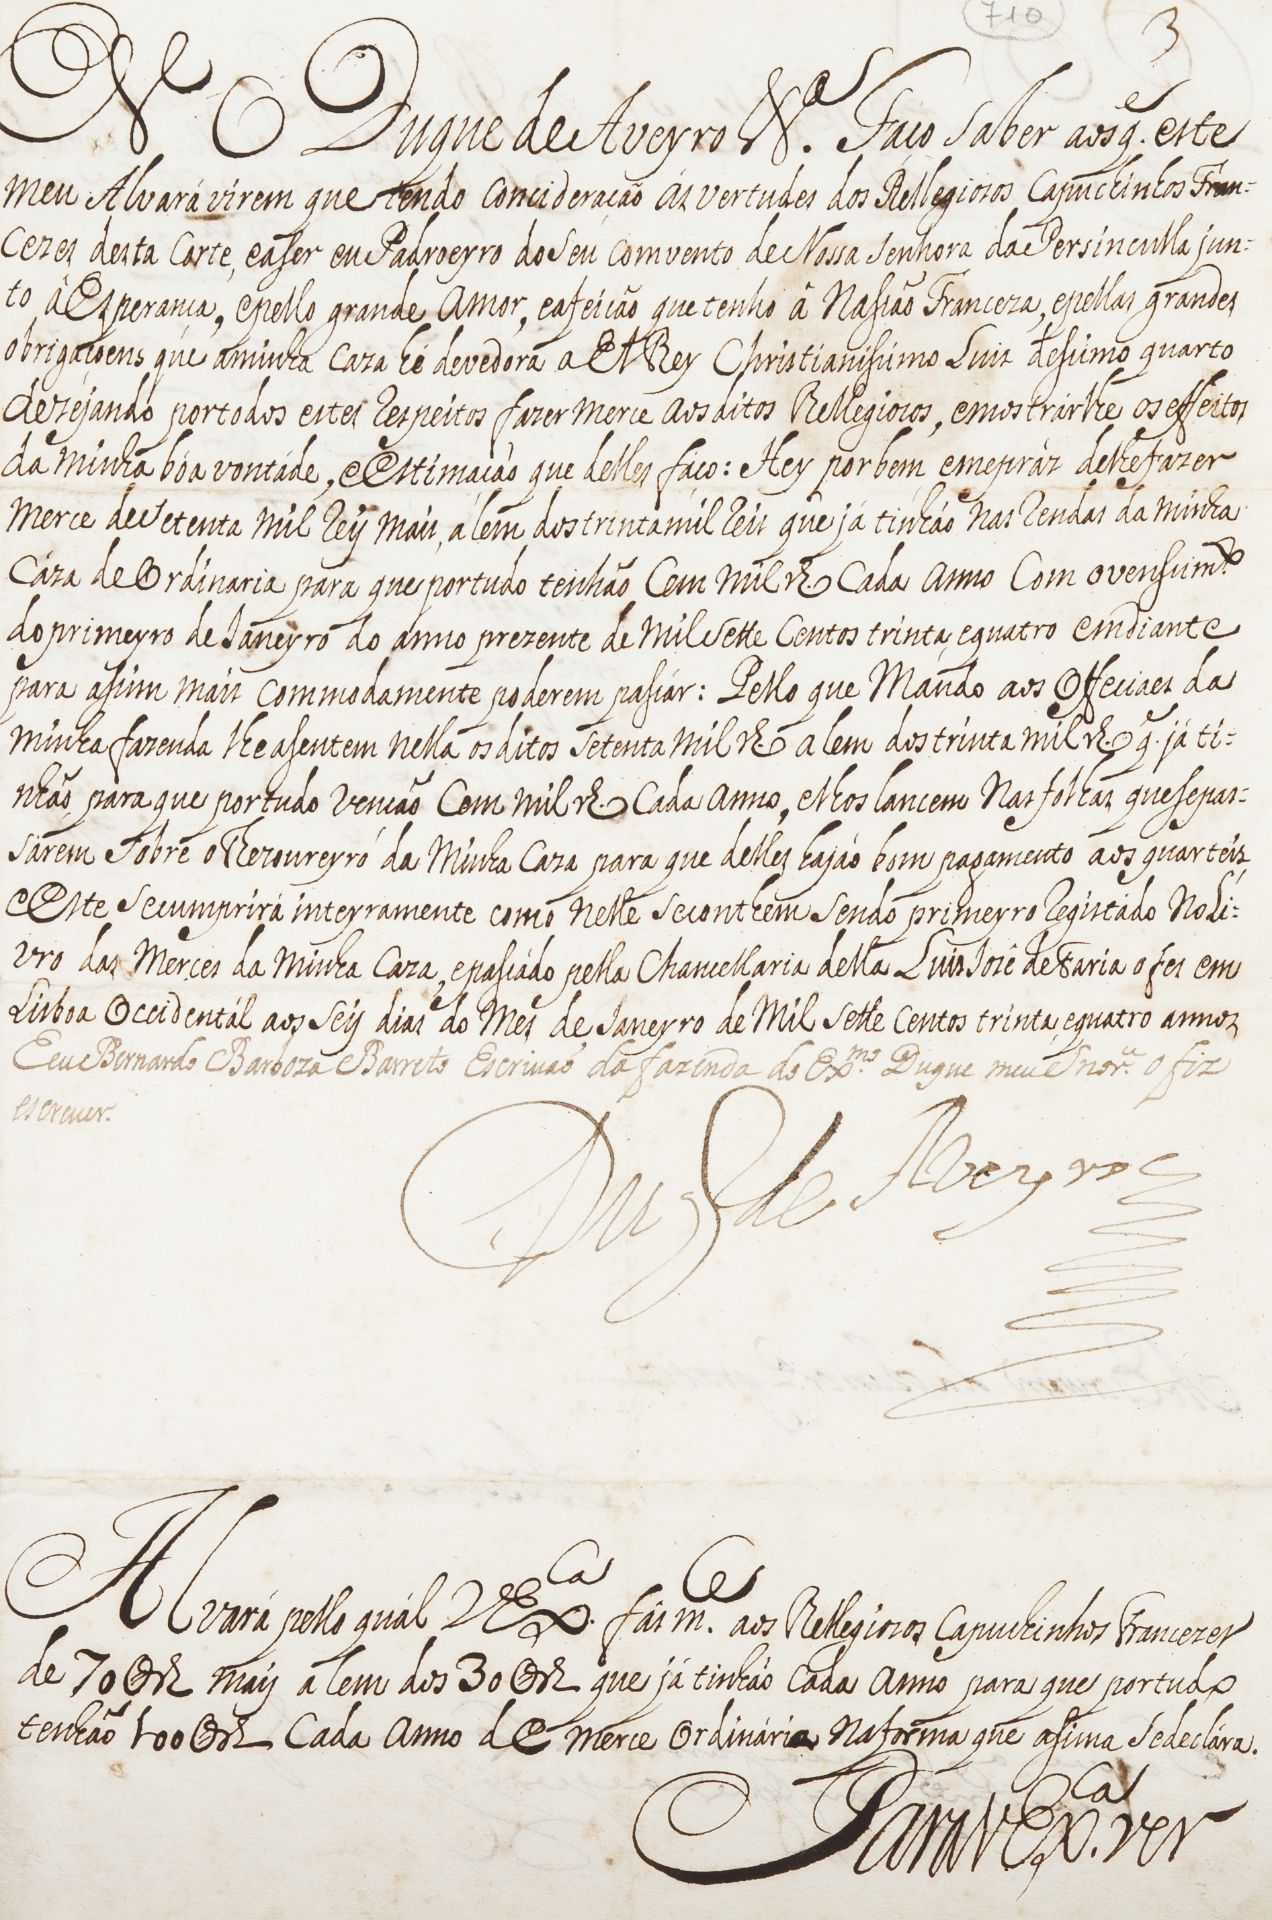 A Duke of Aveiro favour letter - Image 2 of 2